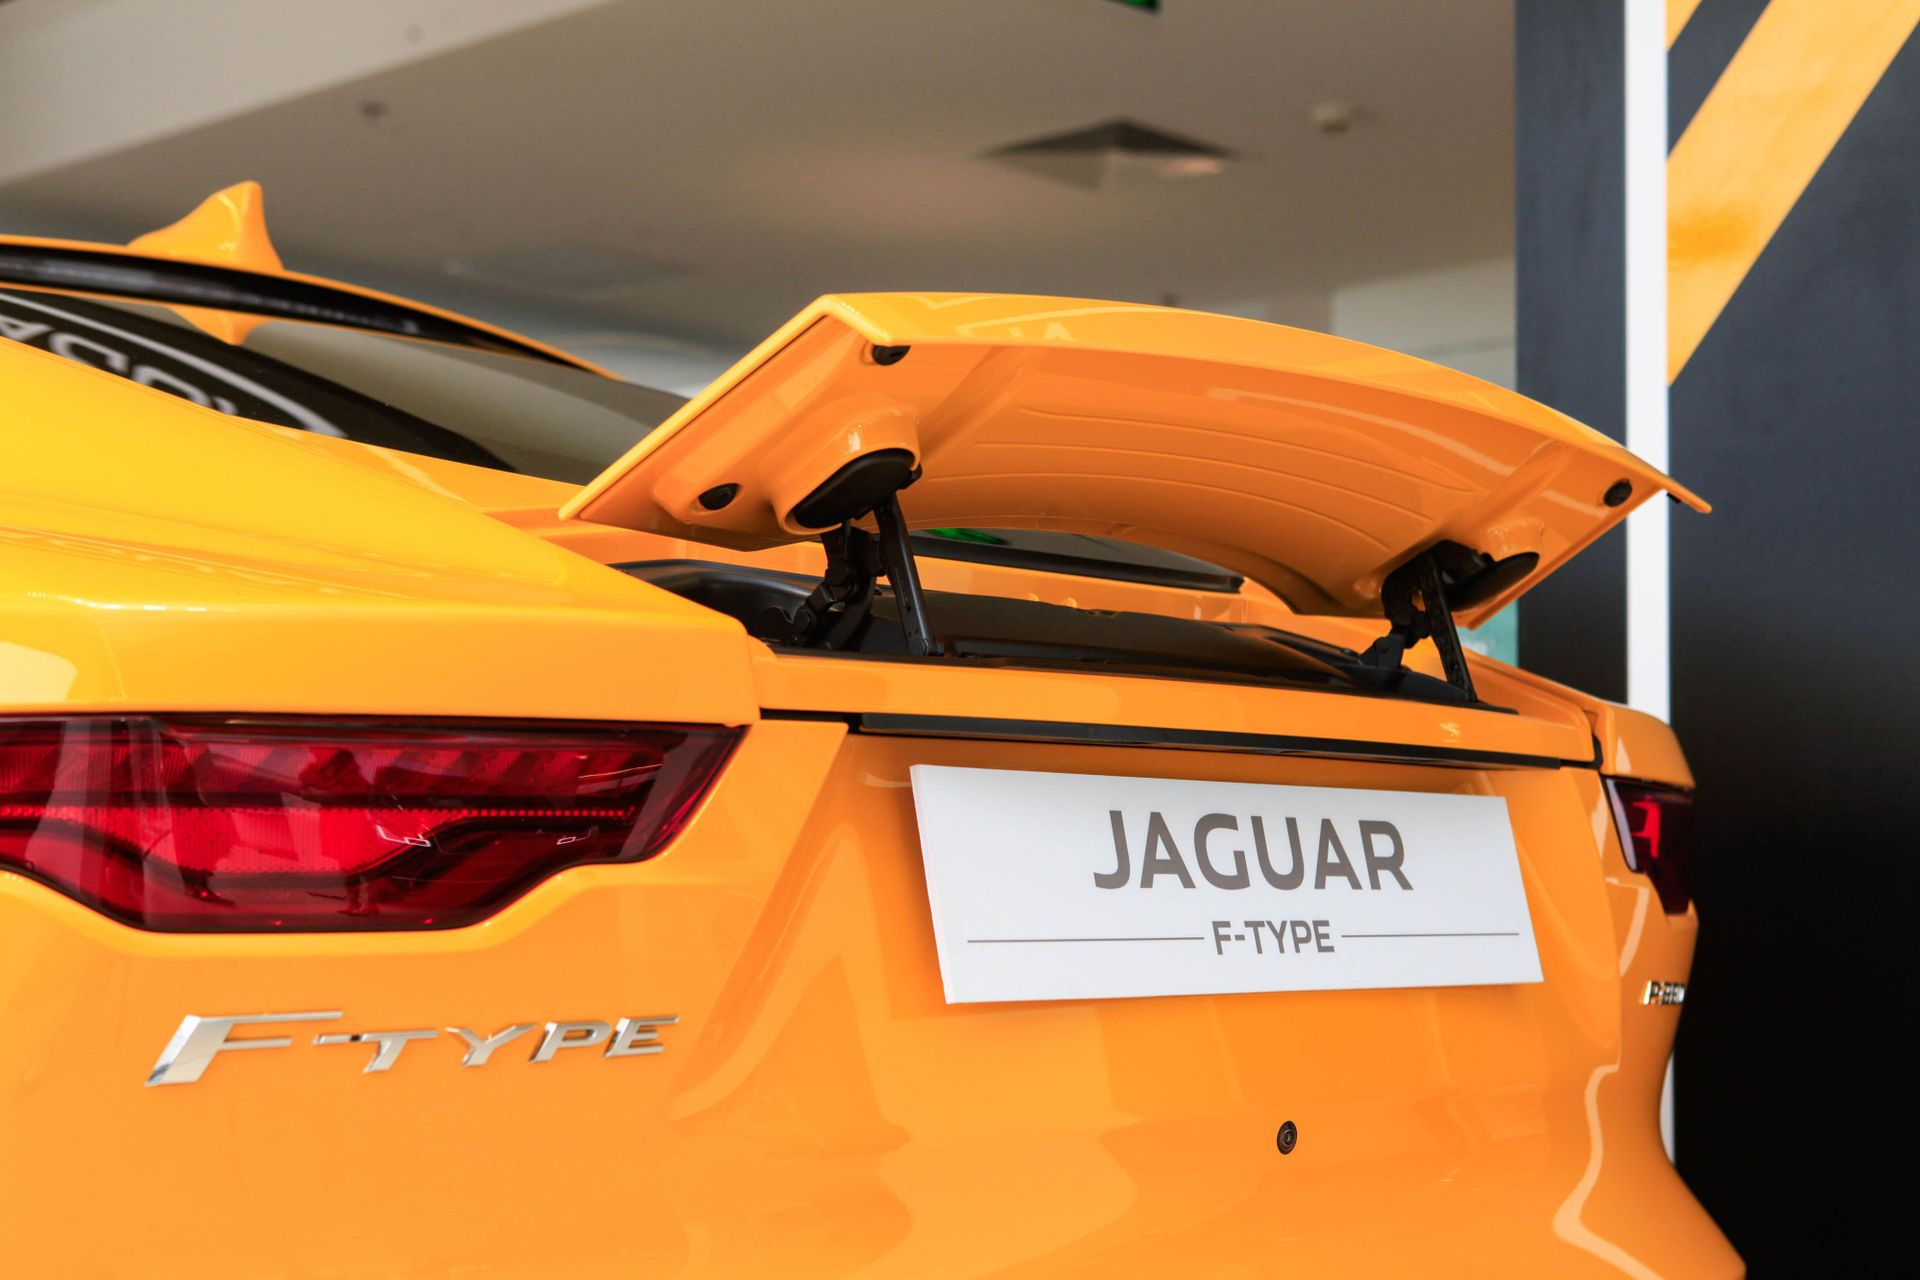 Chi tiet Jaguar F-Type 2021 tai Viet Nam anh 8